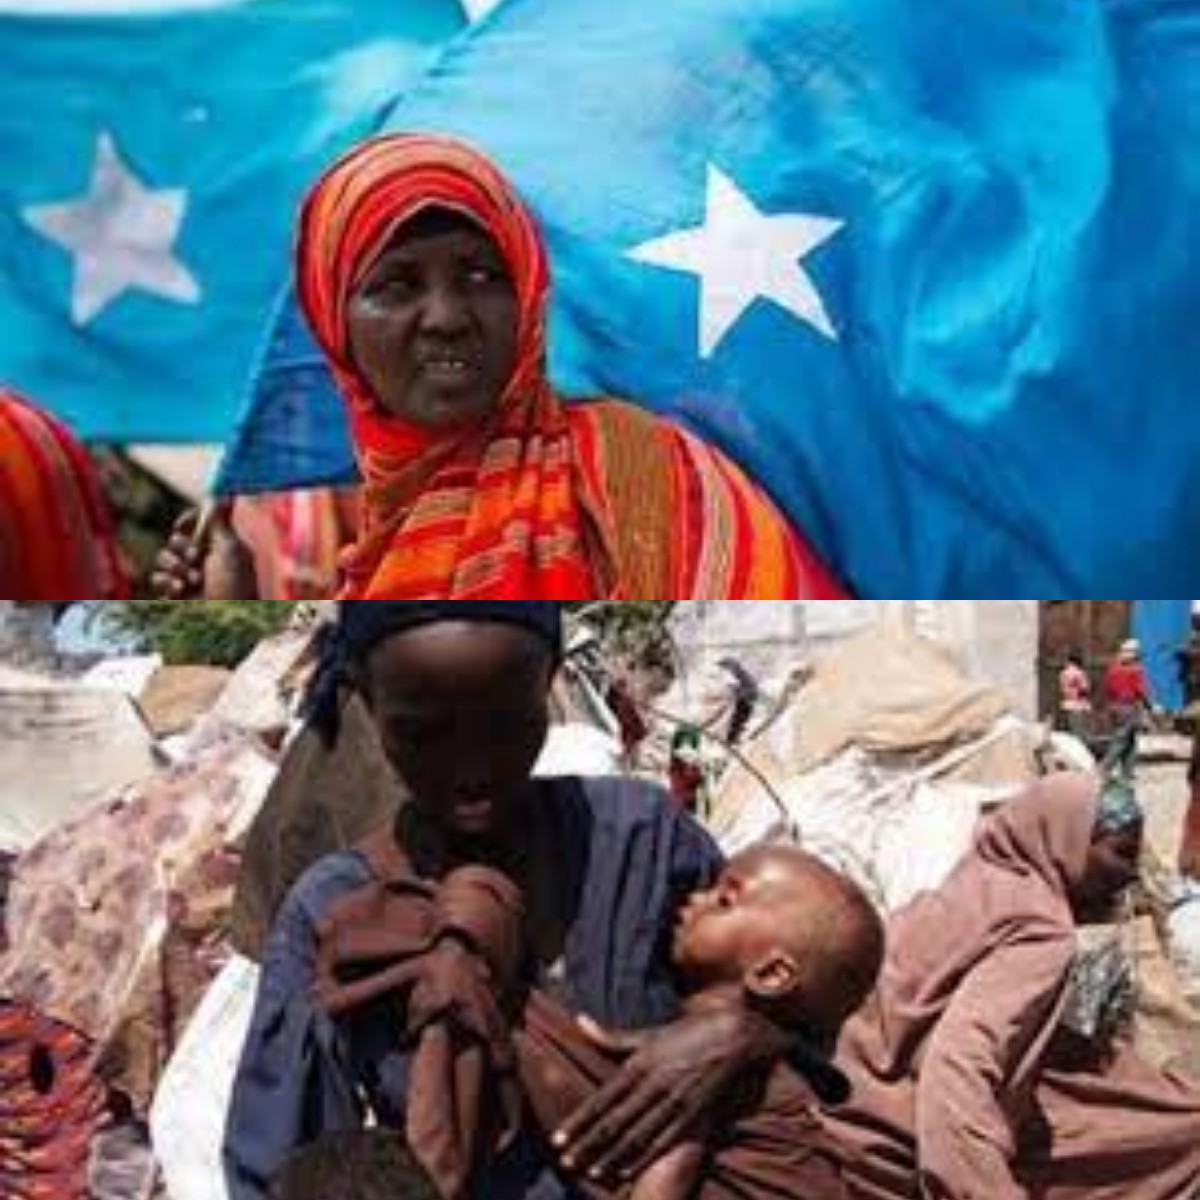 Mengulik Sejarah Bangsa Somalia dengan Warisan Budaya dan Ekonomi yang Kaya 